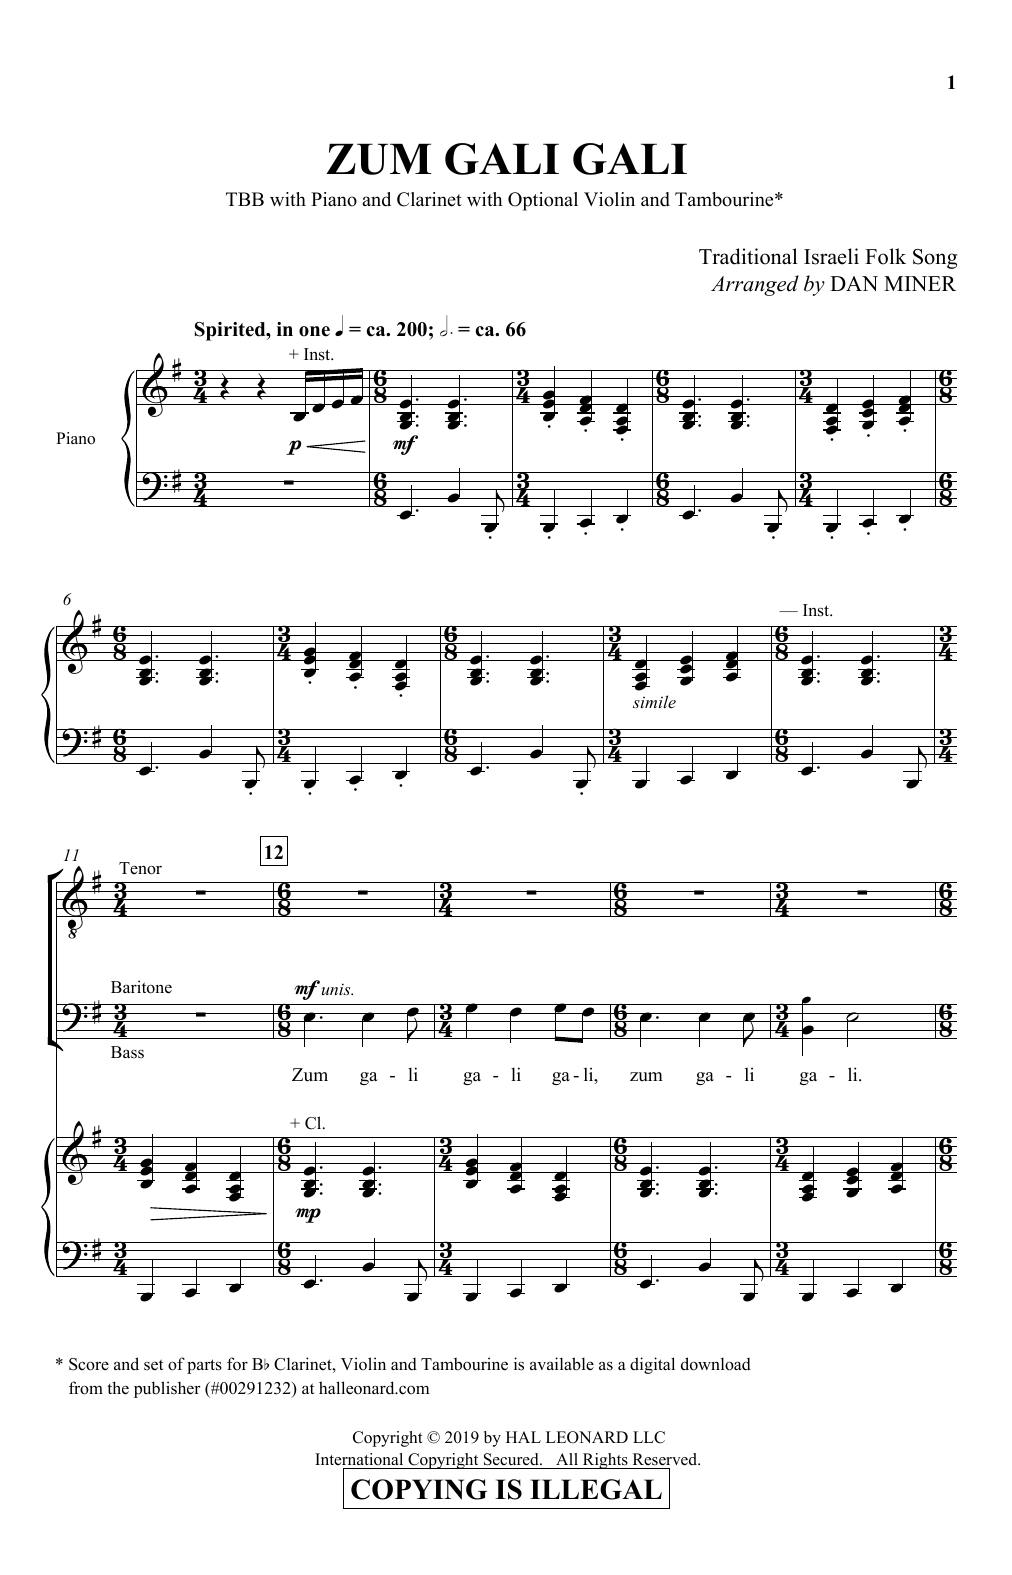 Download Dan Miner Zum Gali Gali Sheet Music and learn how to play TBB Choir PDF digital score in minutes